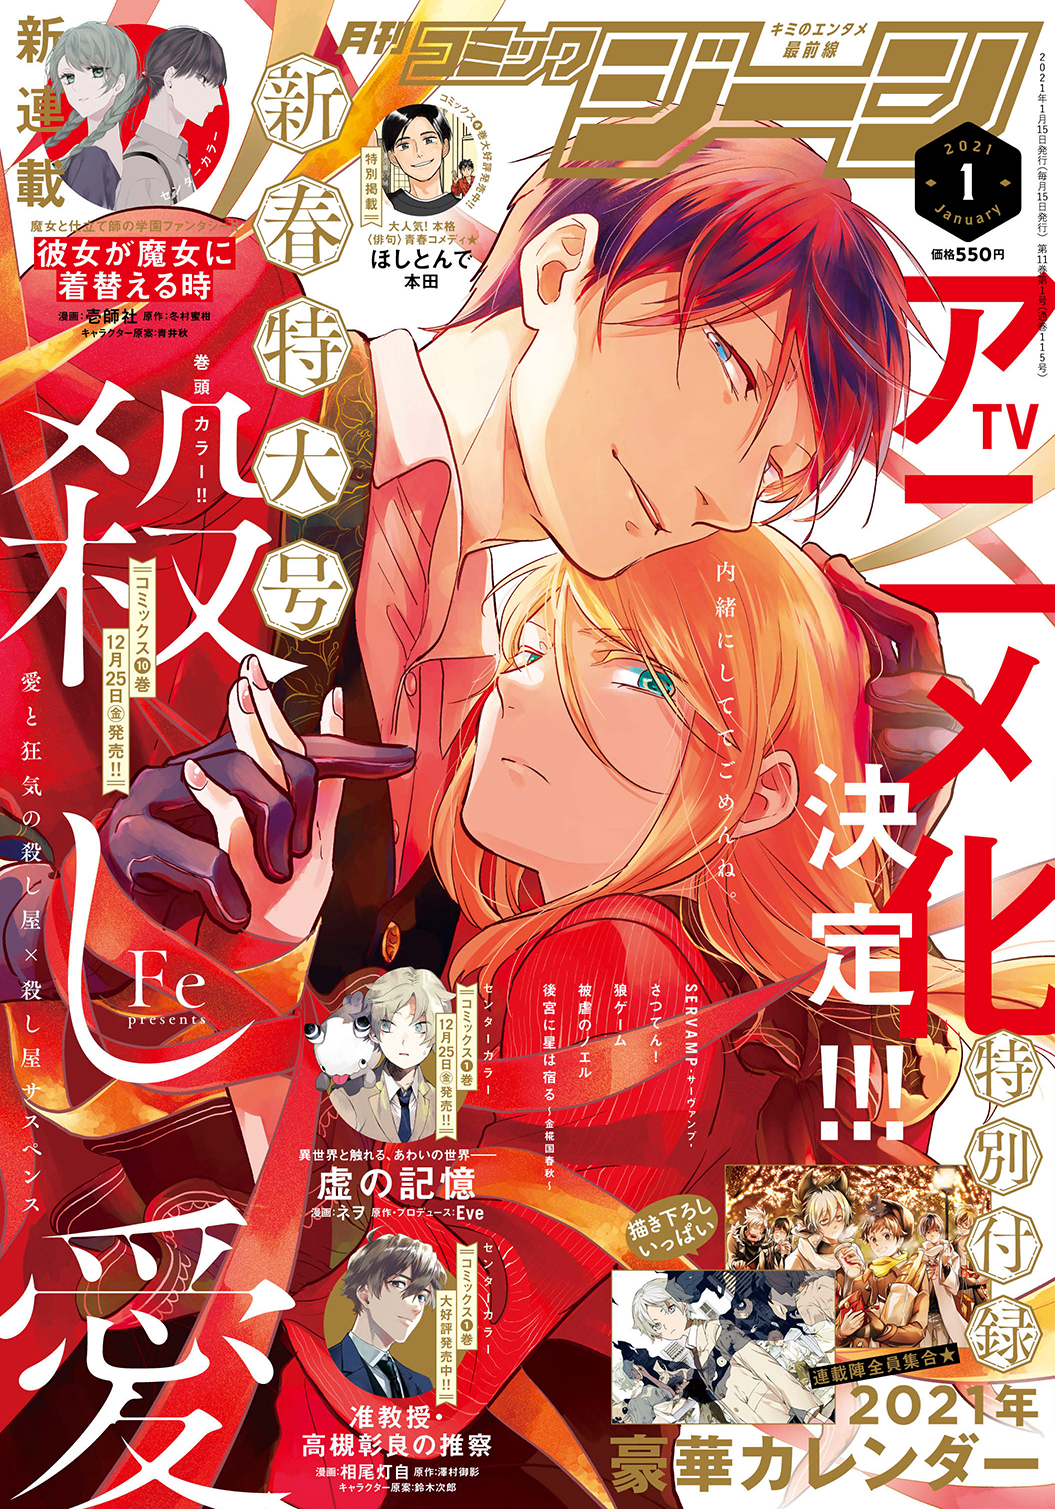 Crunchyroll - Hitman Romance Manga Love of Kill Gets TV Anime Adaptation